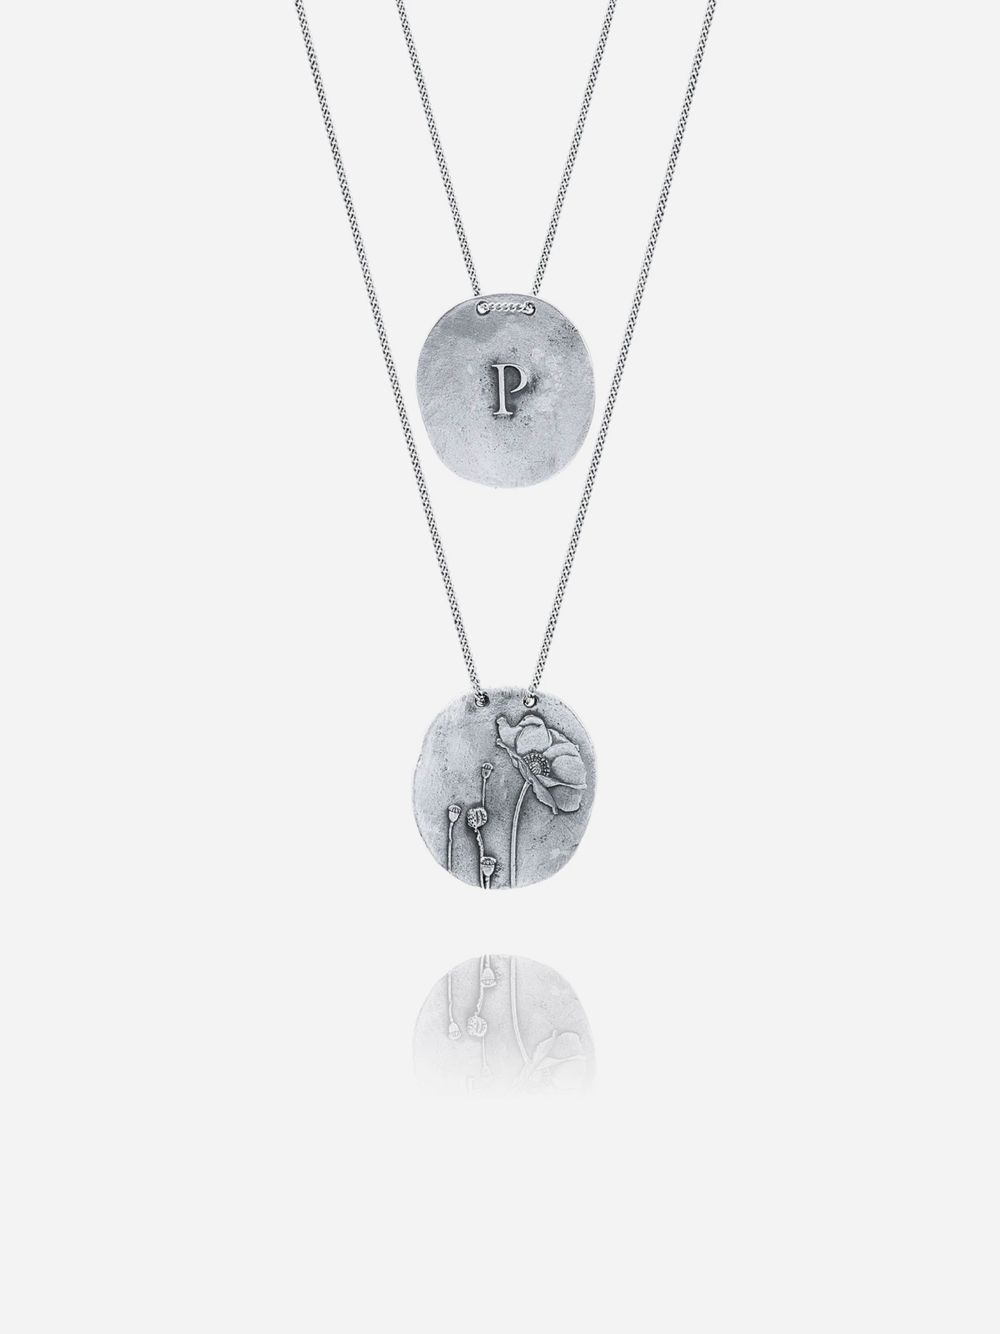 Silver P Necklace